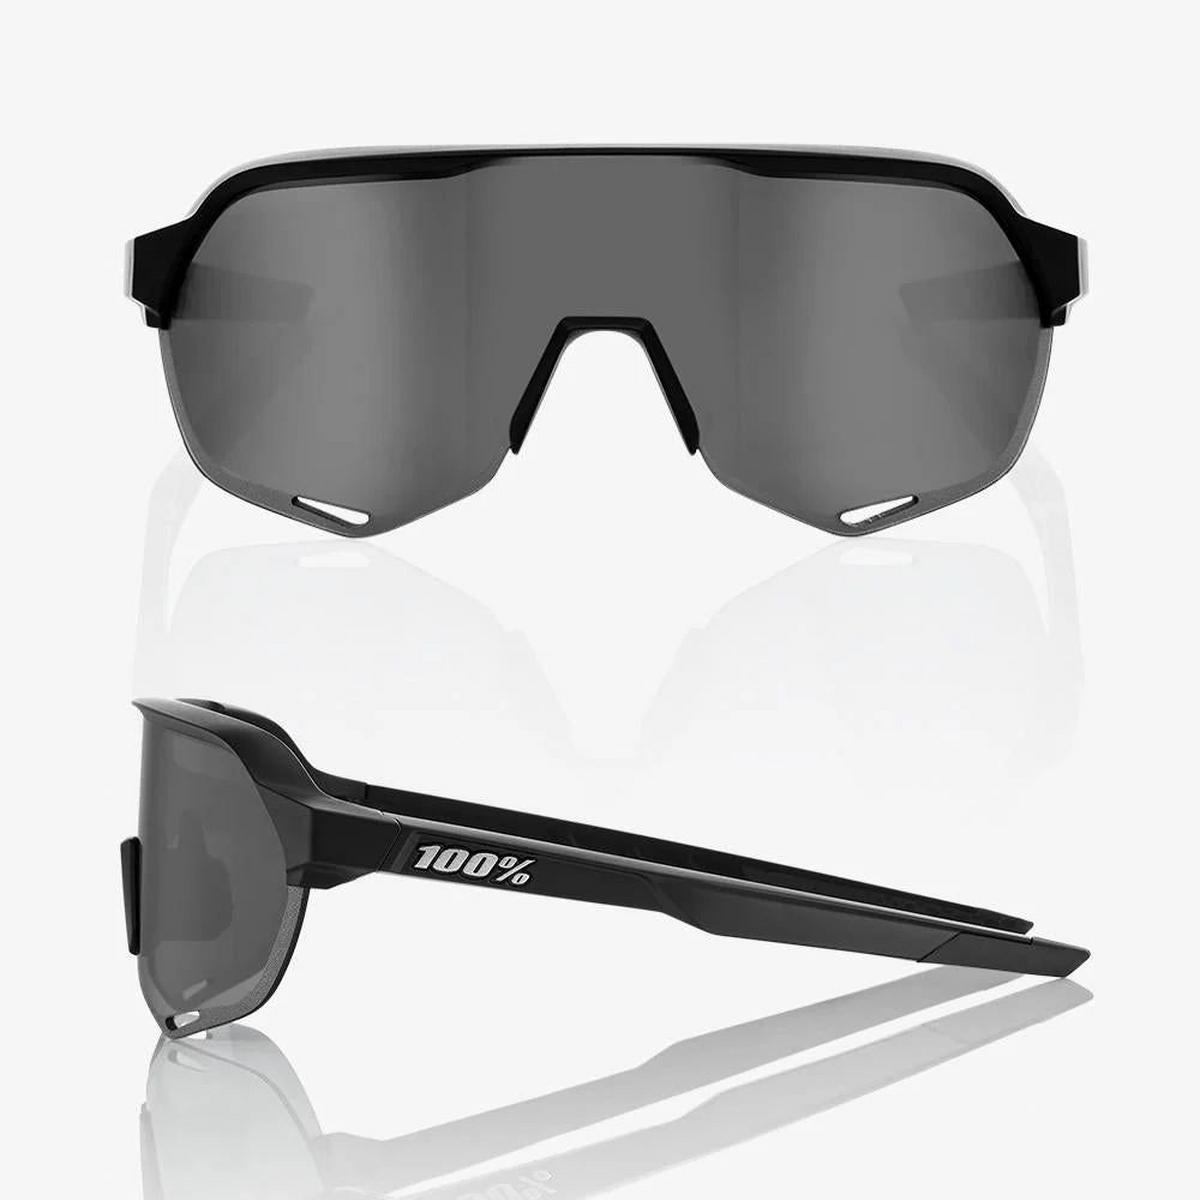 100% S2 Sunglasses - Soft Tact Black - Smoke Lens